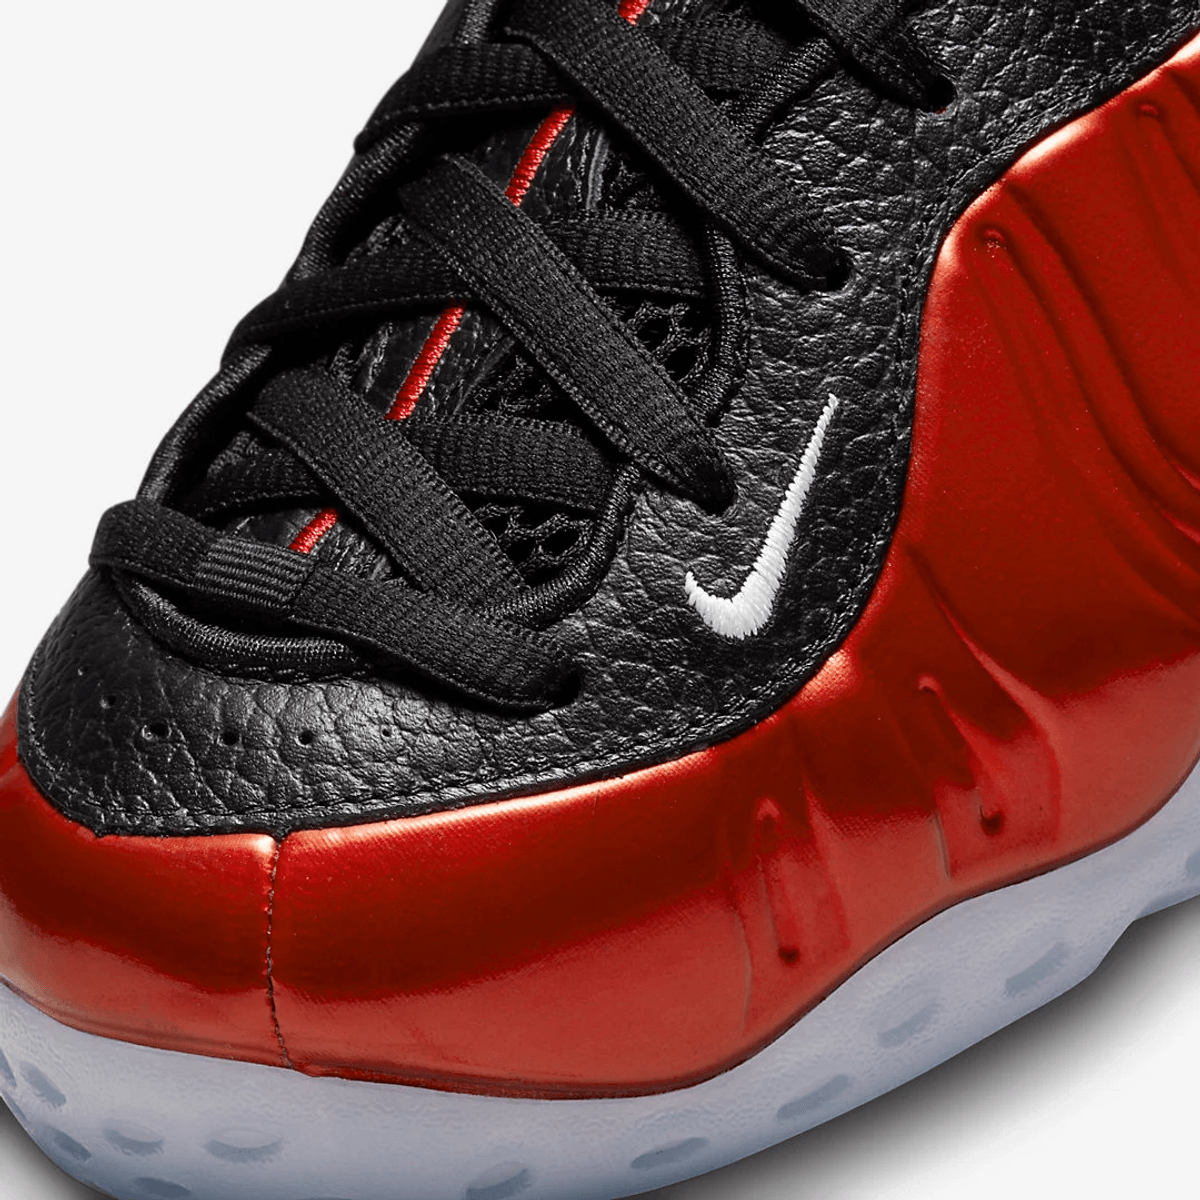 The Nike Air Foamposite Returns in Metallic Red